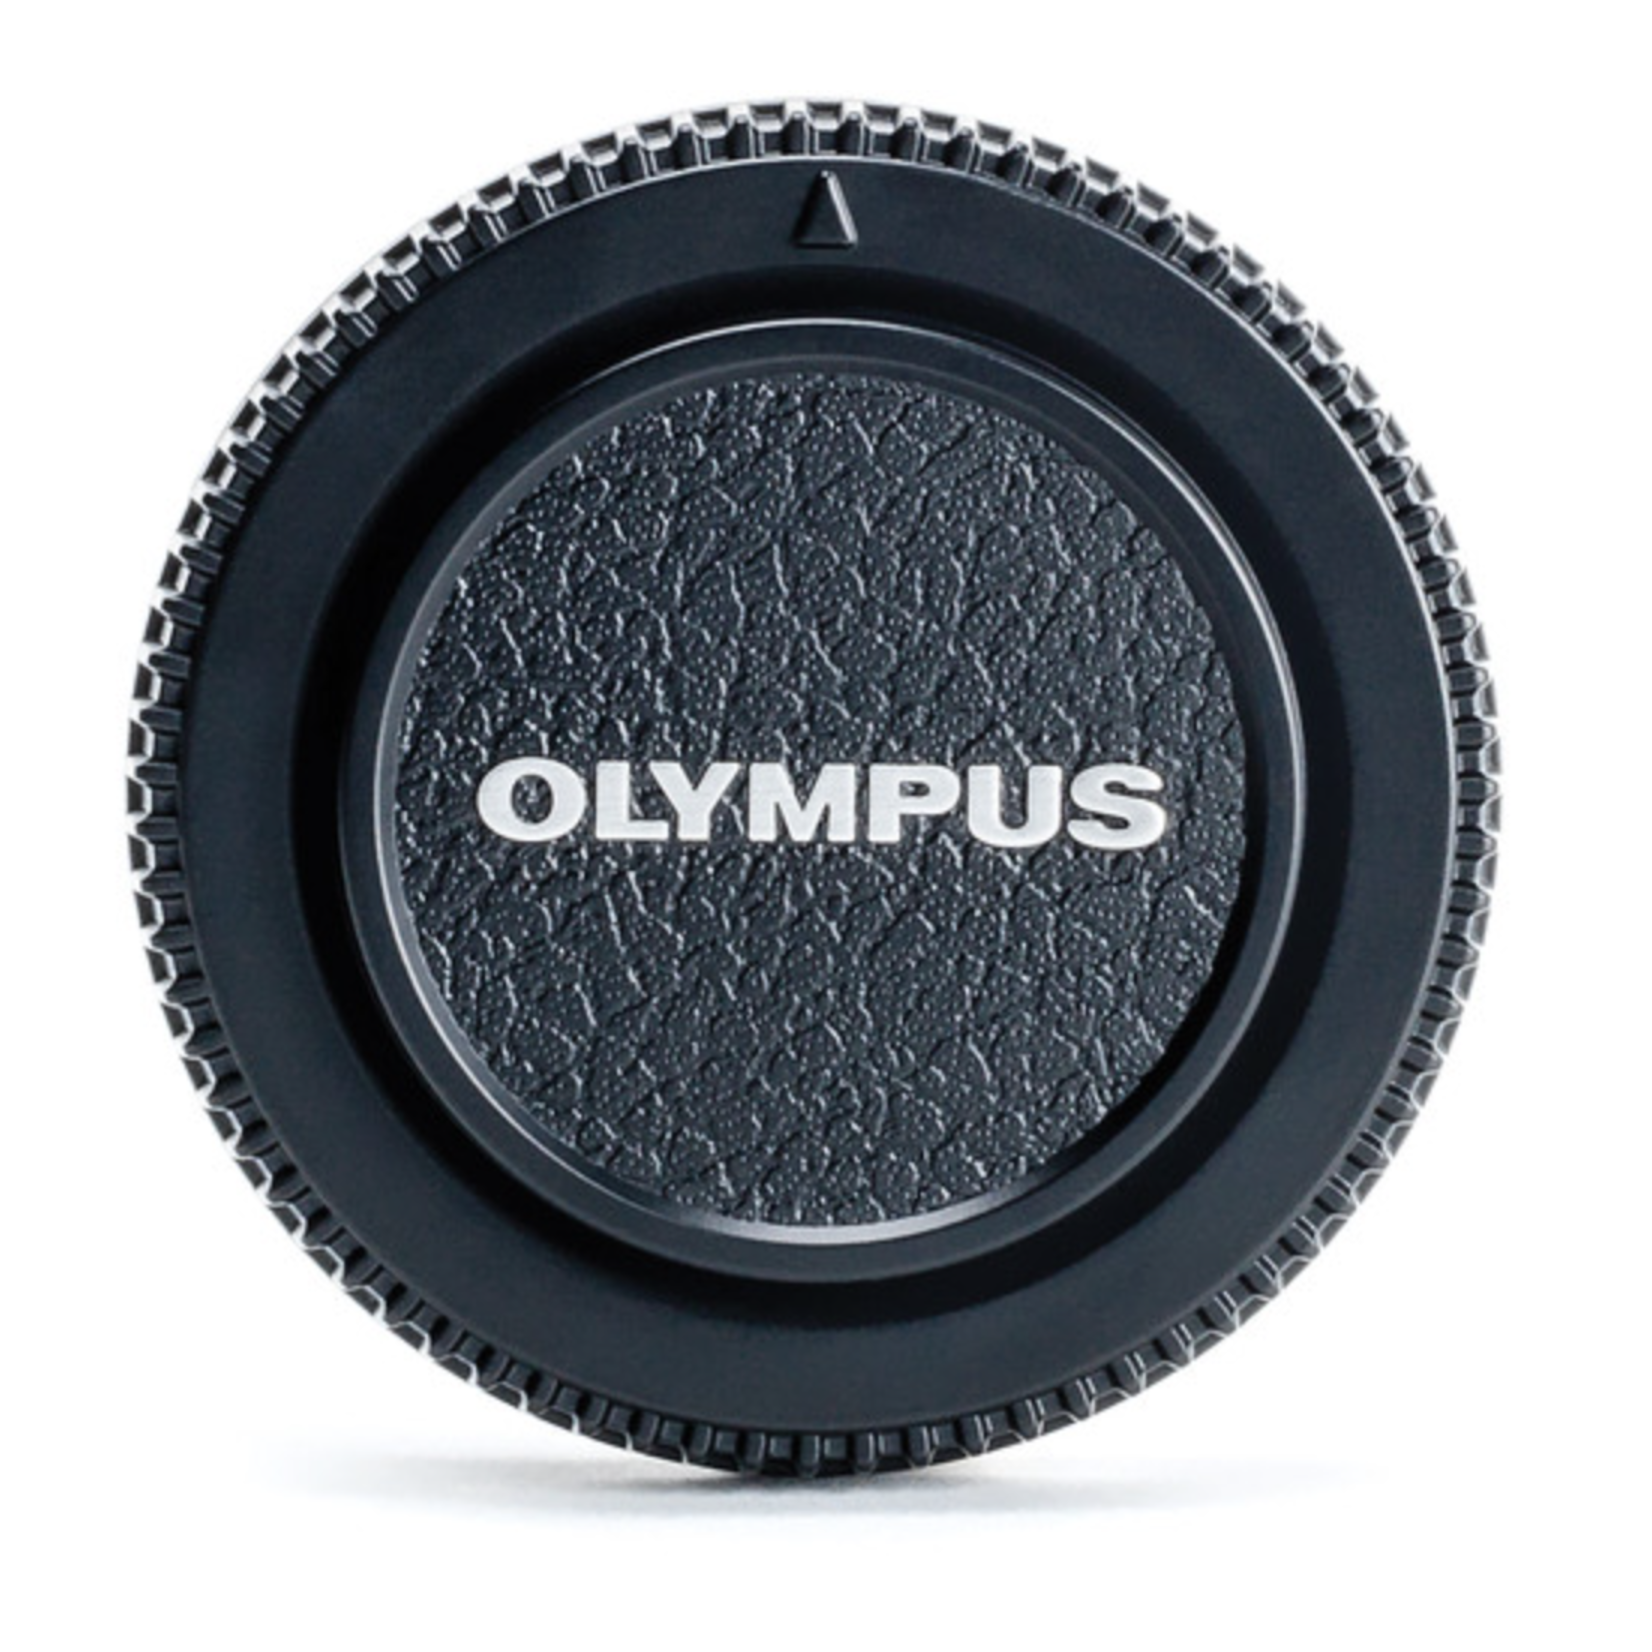 Olympus / OM System Olympus BC-3 Lens Cap for MC-14 1.4x Teleconverter